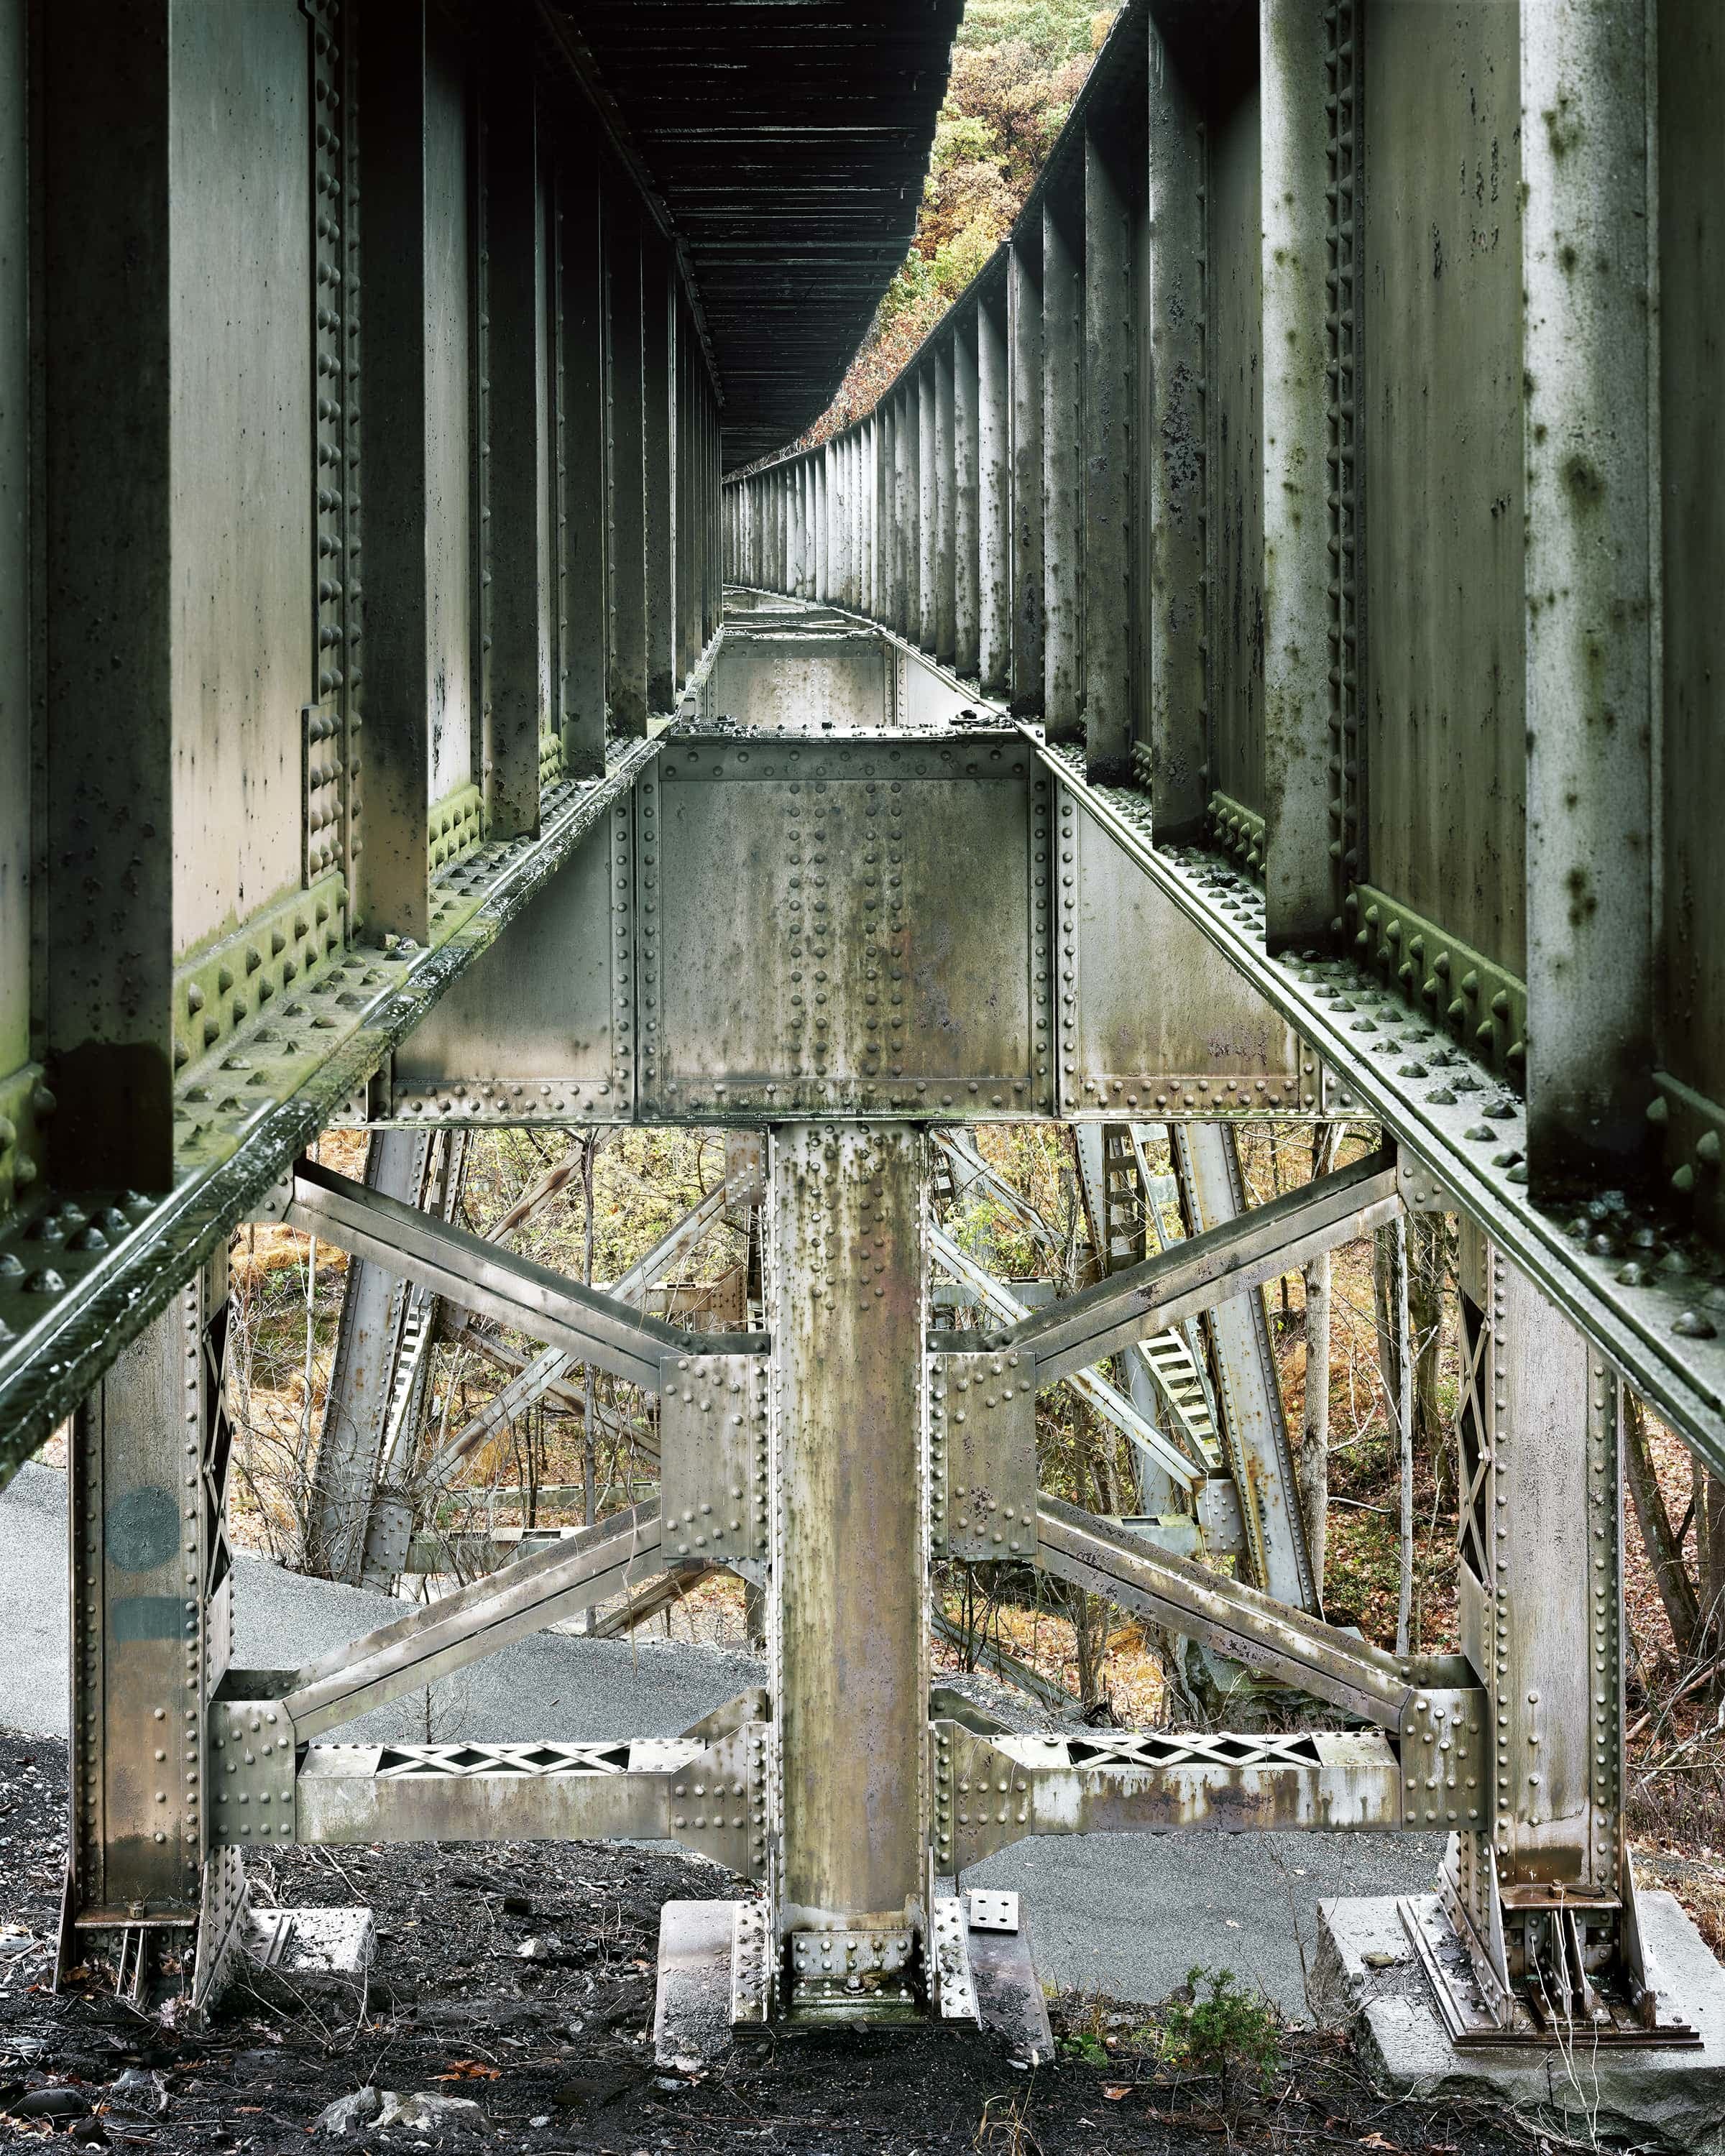 Interior of open deck truss of Western Maryland railway bridge over autumn landscape.